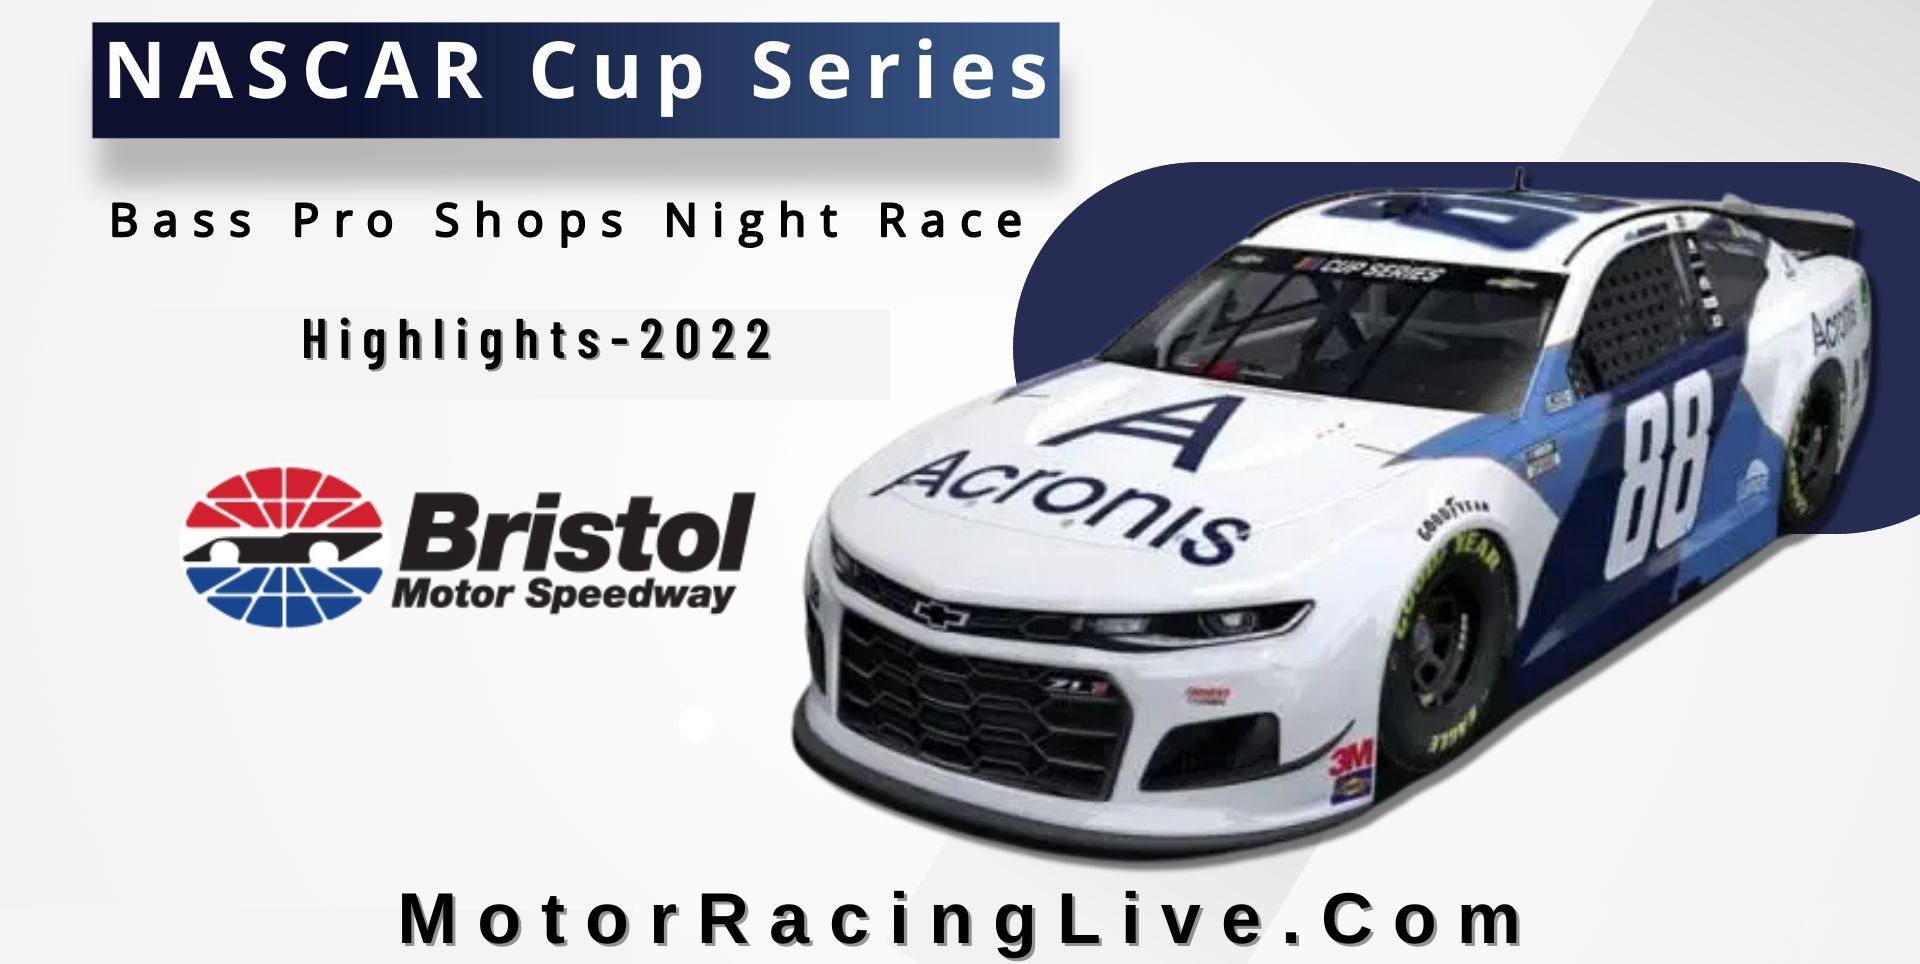 Bass Pro Shops Night Race Highlights 2022 NASCAR Cup